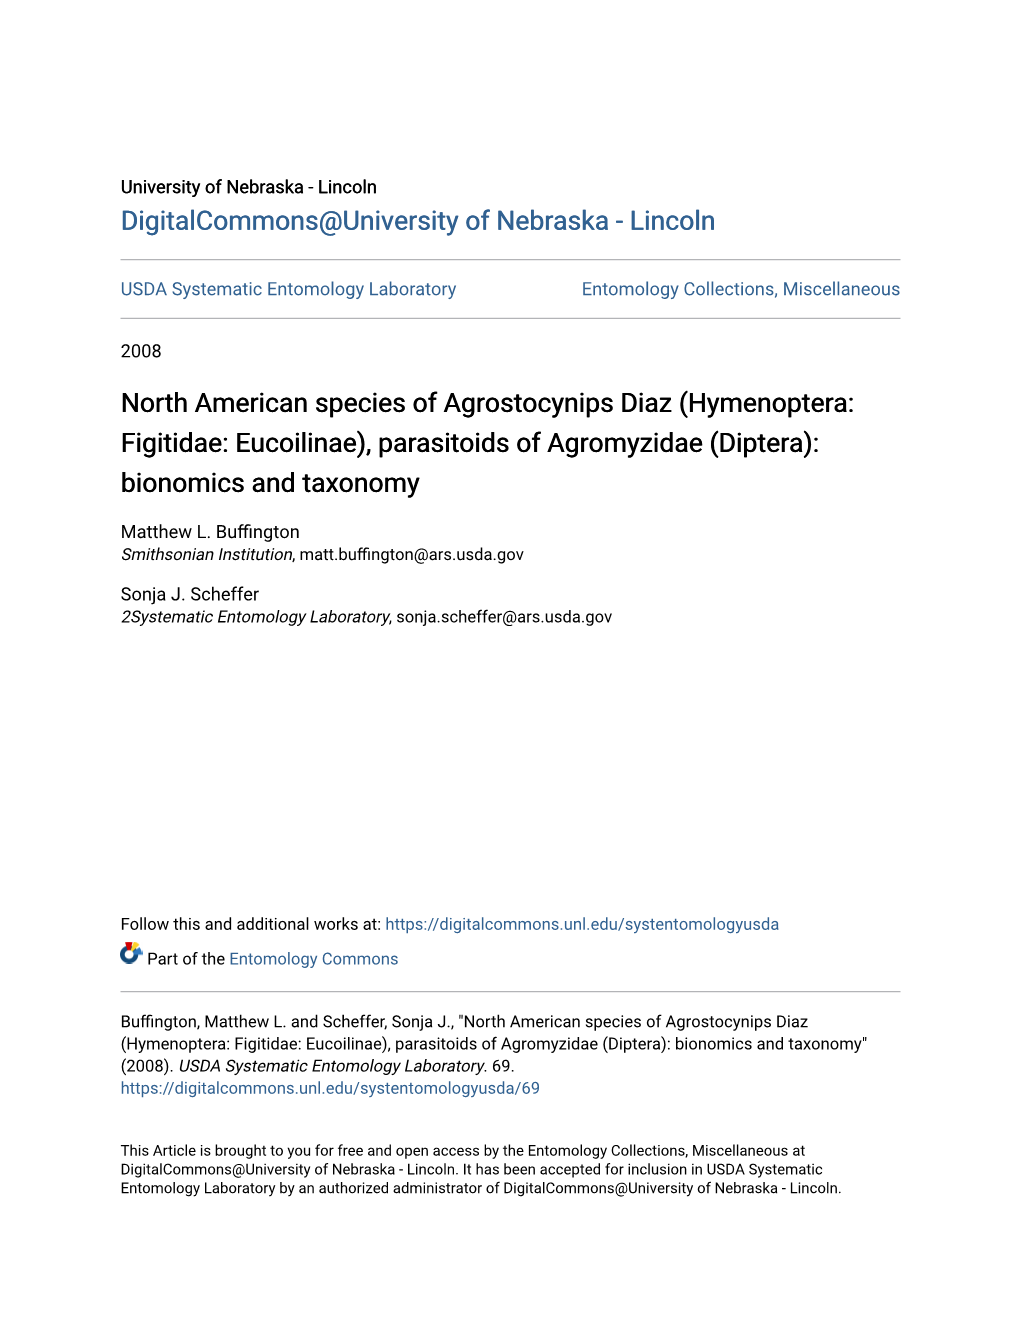 North American Species of Agrostocynips Diaz (Hymenoptera: Figitidae: Eucoilinae), Parasitoids of Agromyzidae (Diptera): Bionomics and Taxonomy